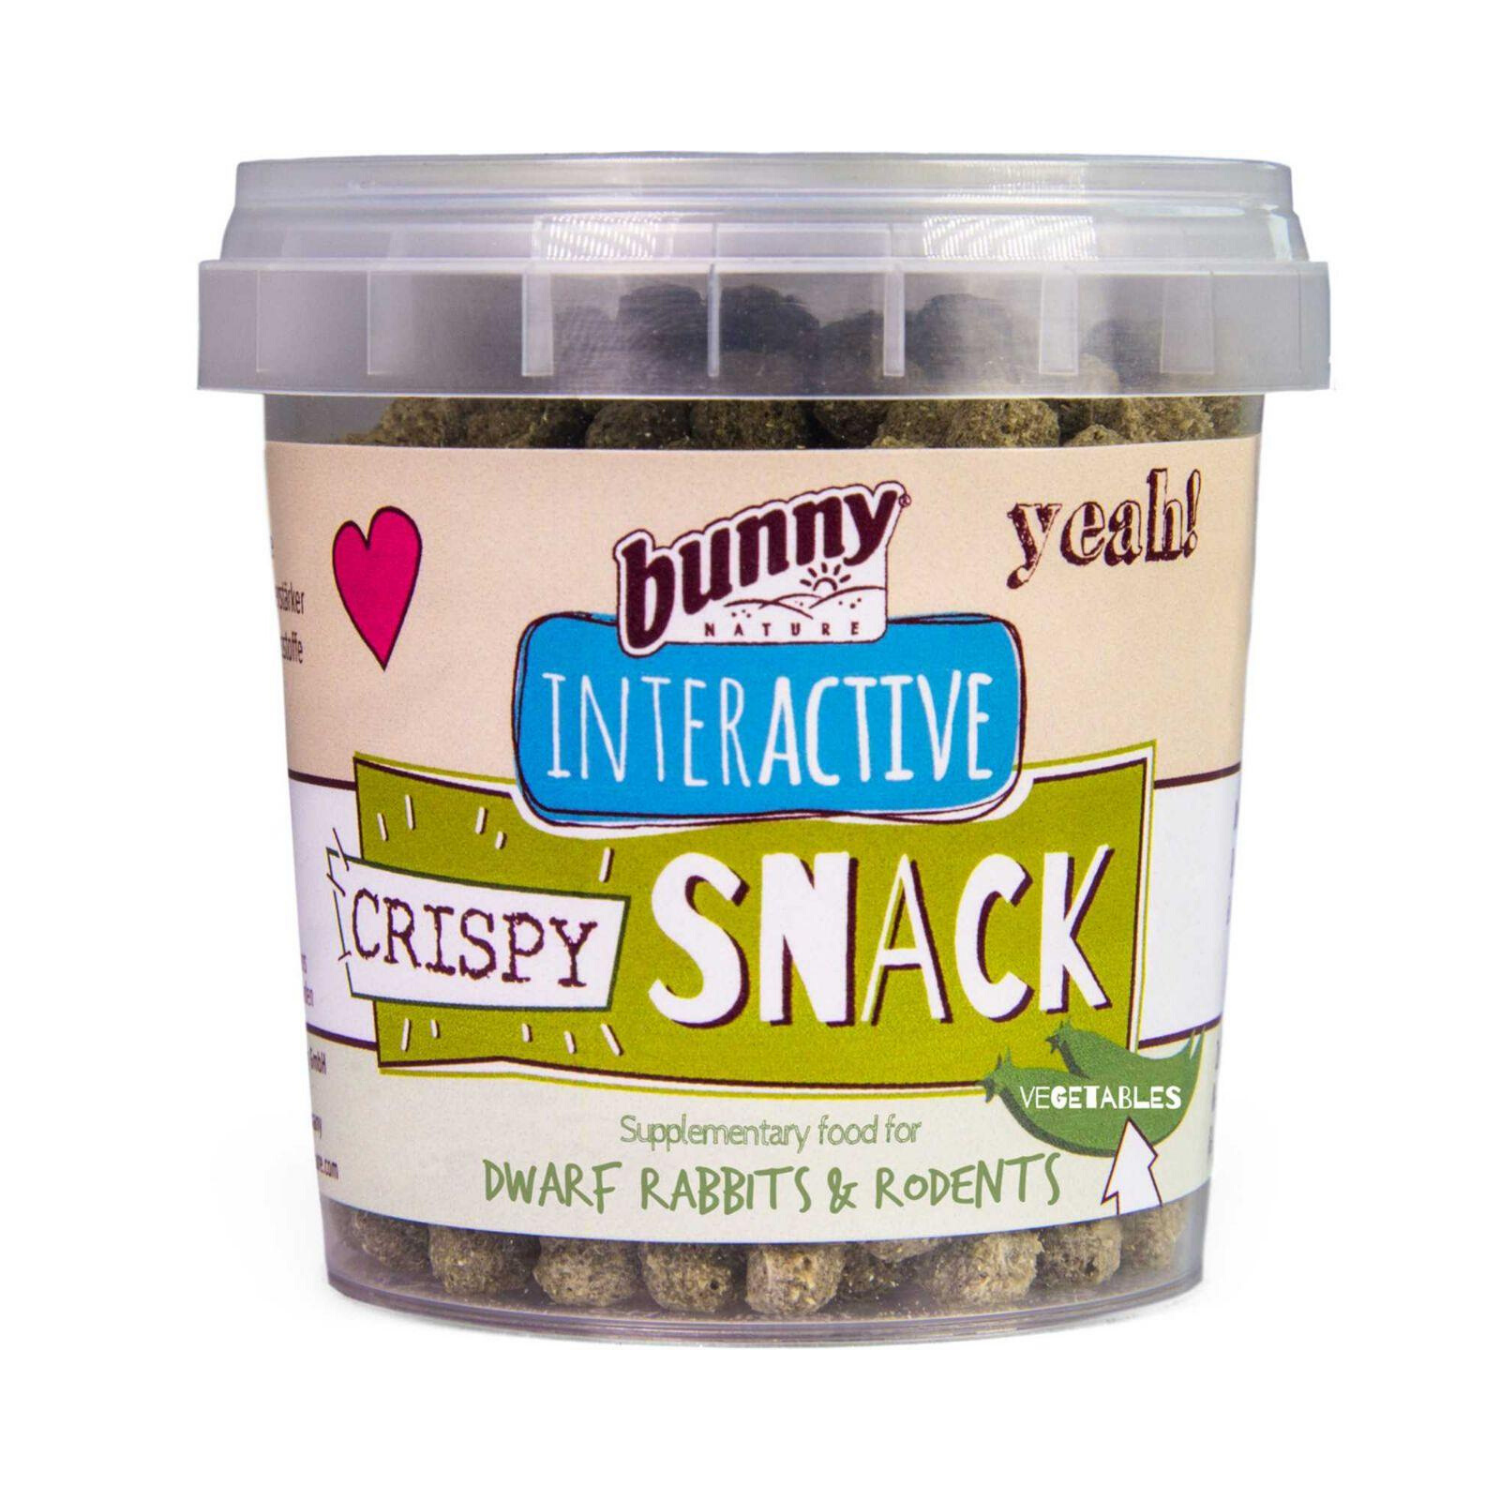 Bunny Nature Crispy Snack (Vegetables) - 30g